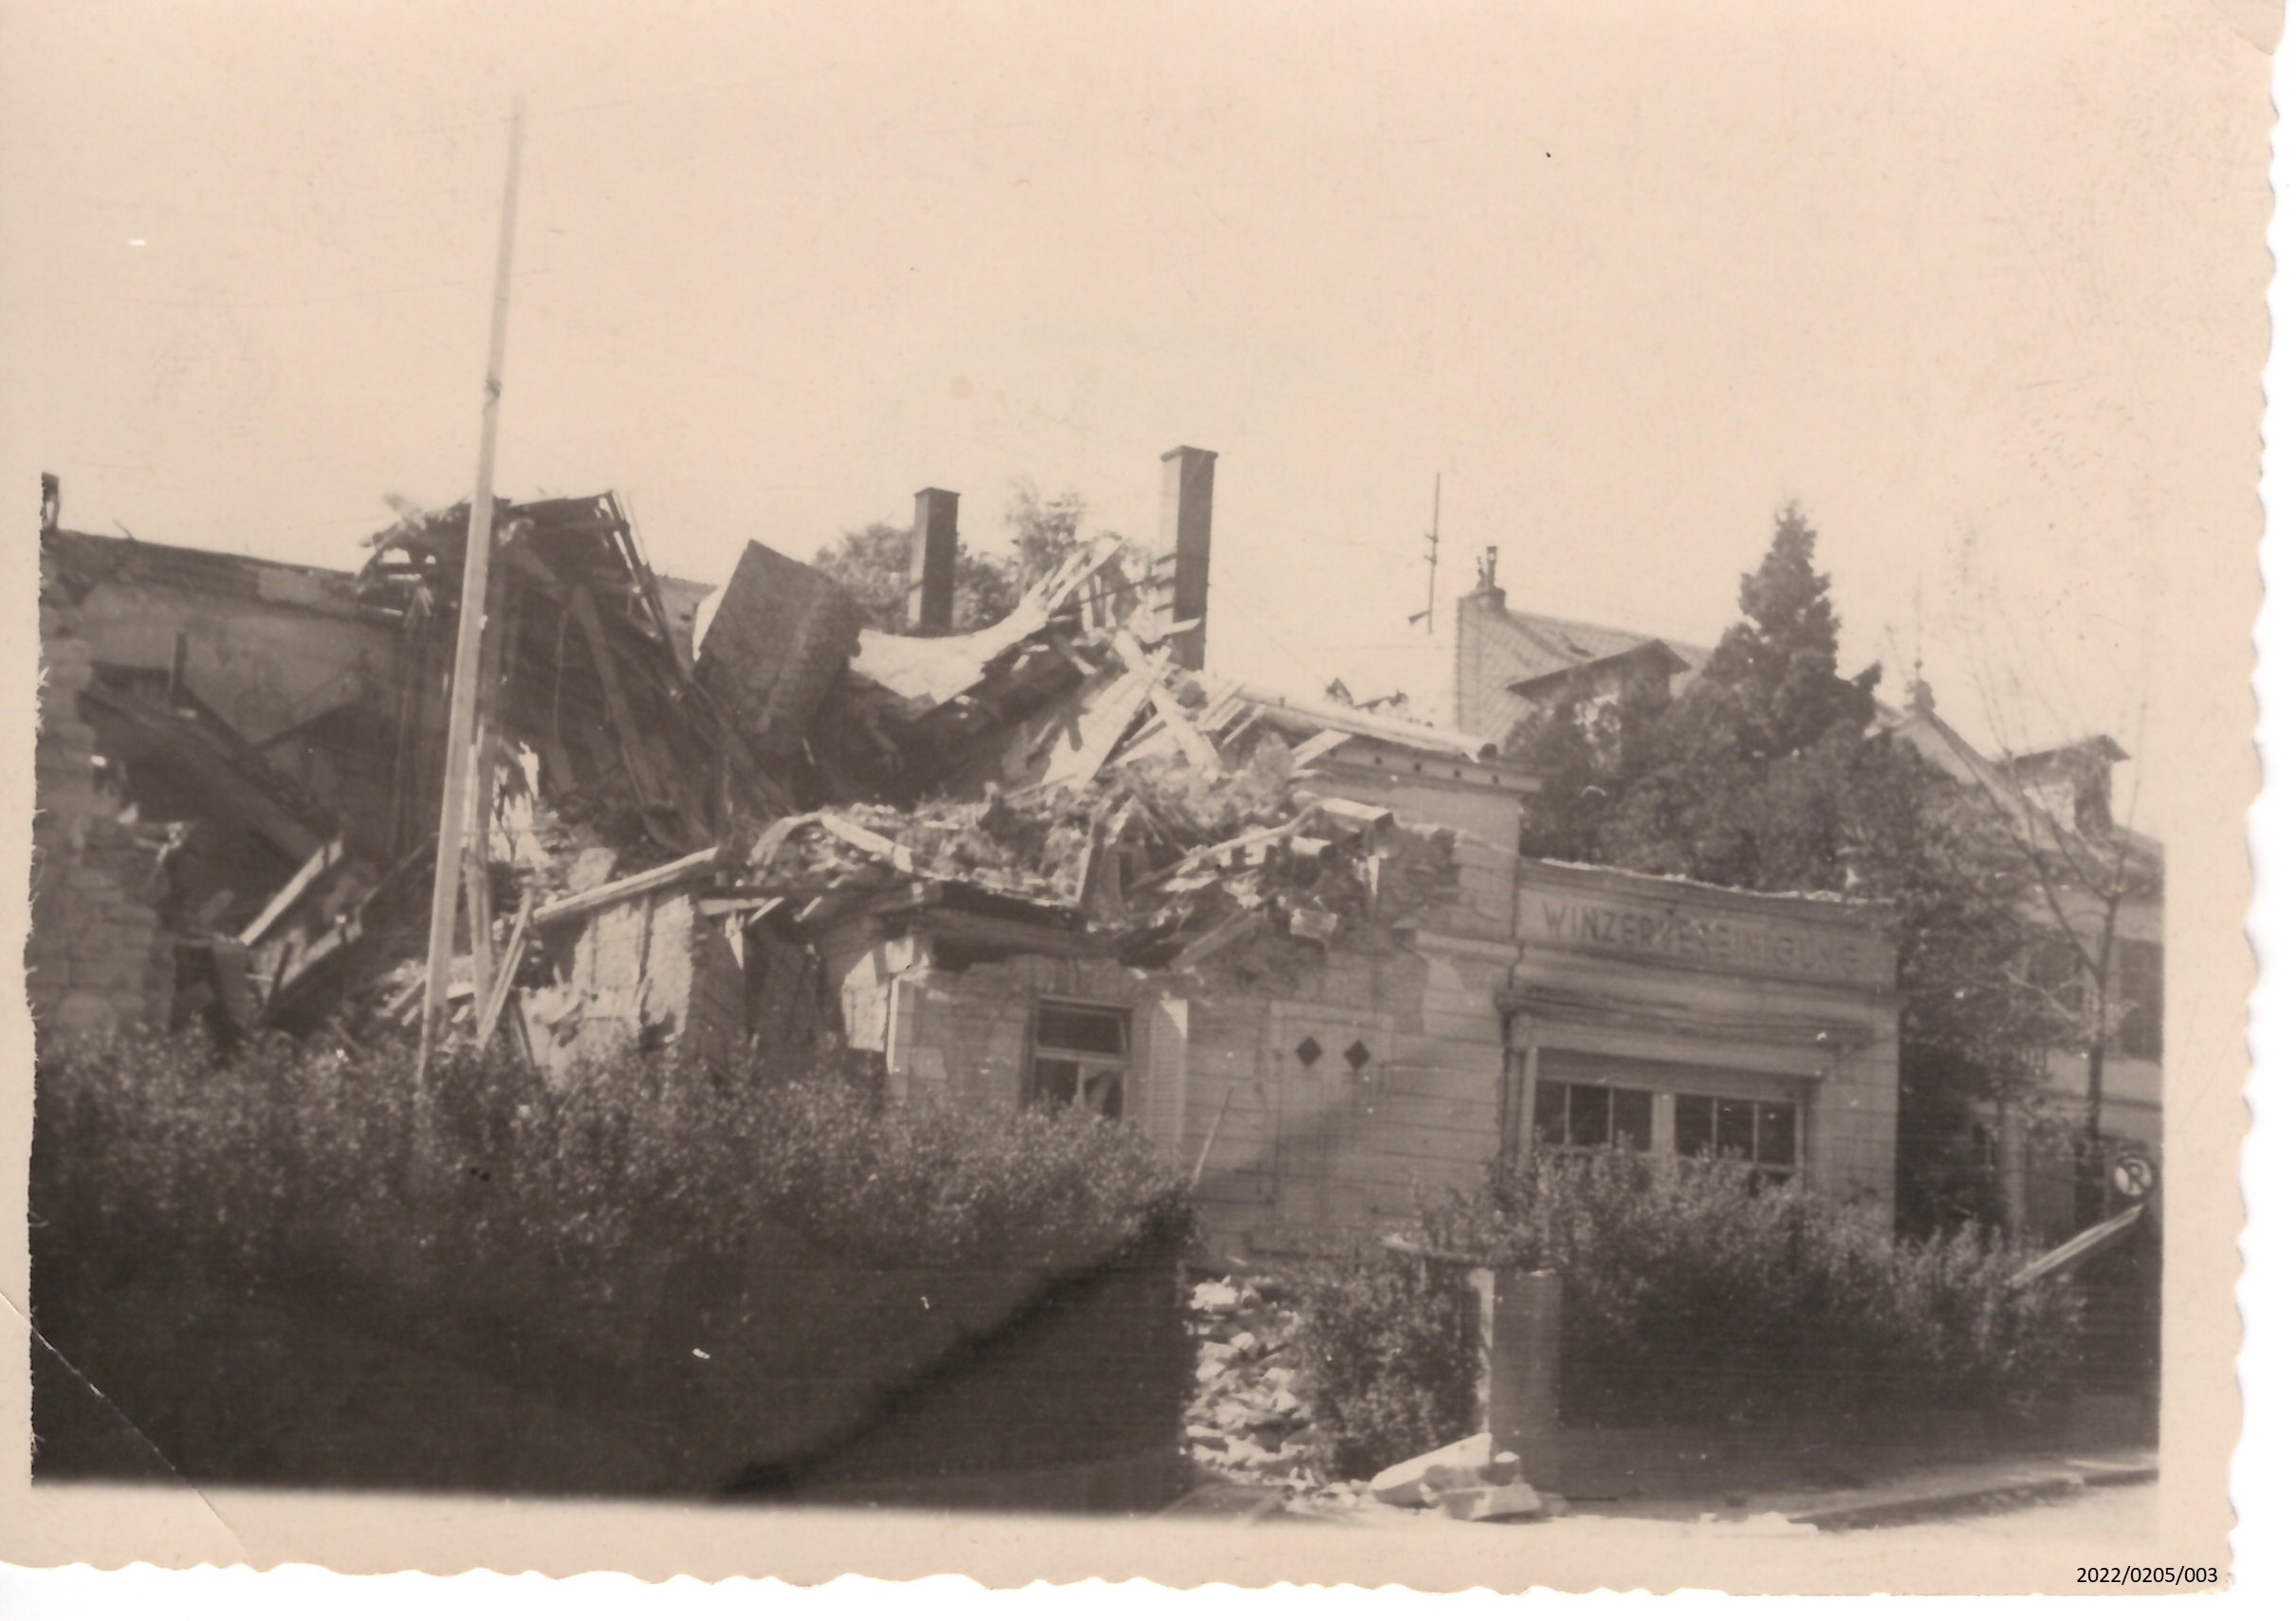 Fotos des zerstörten Bad Dürkheims nach 1945 (Stadtmuseum Bad Dürkheim im Kulturzentrum Haus Catoir CC BY-NC-SA)